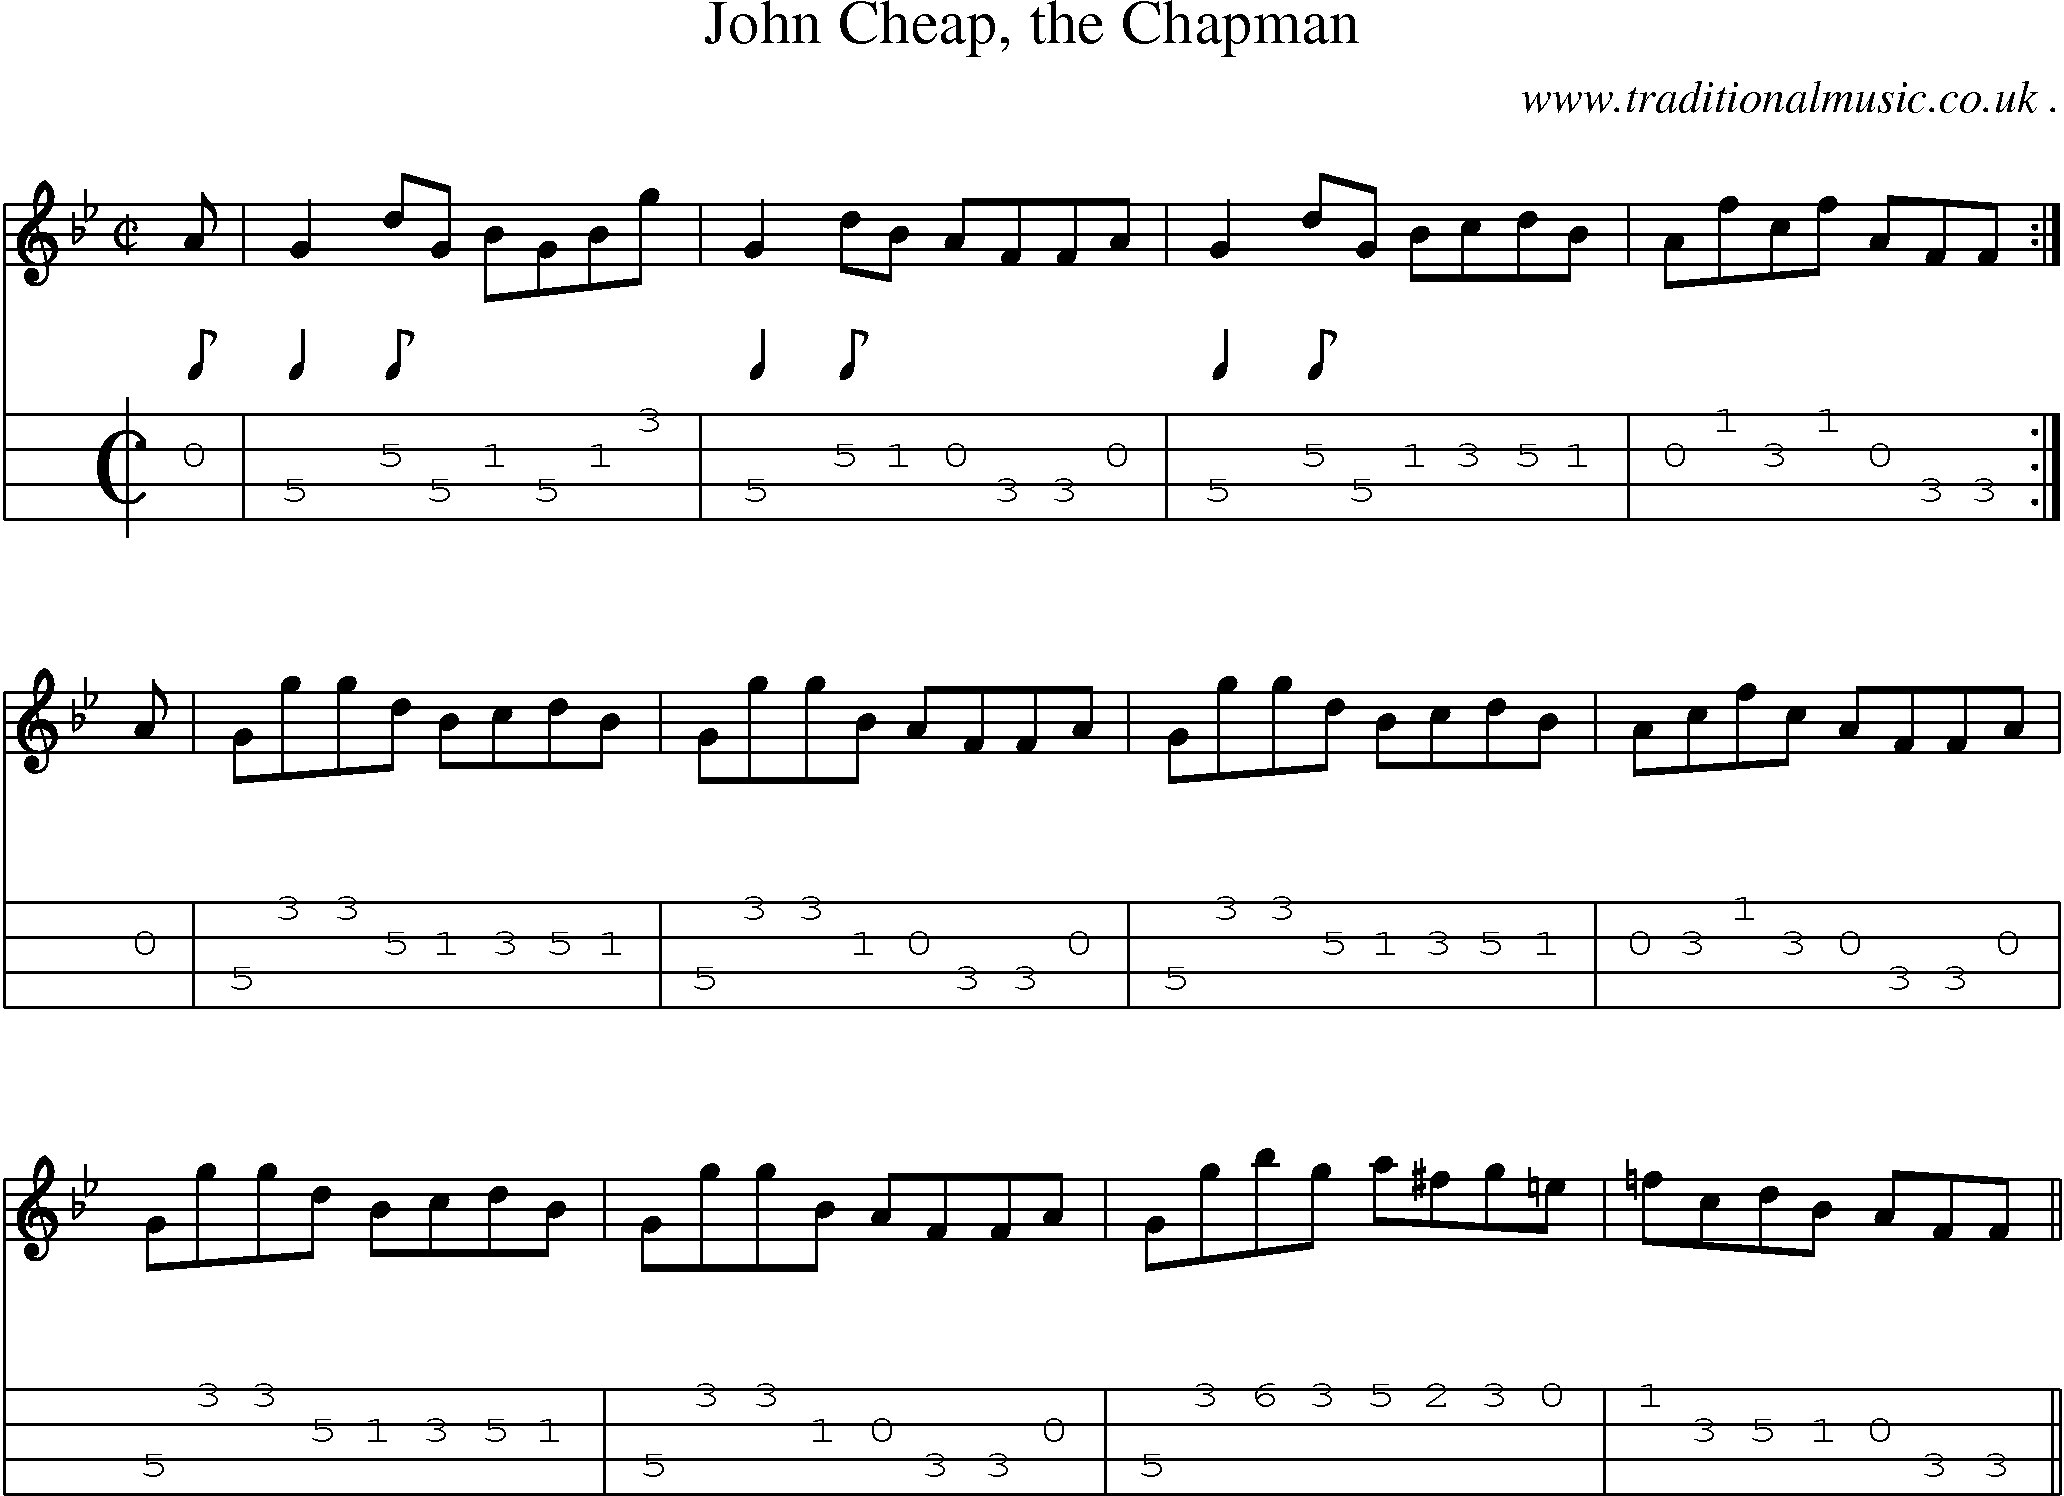 Sheet-music  score, Chords and Mandolin Tabs for John Cheap The Chapman